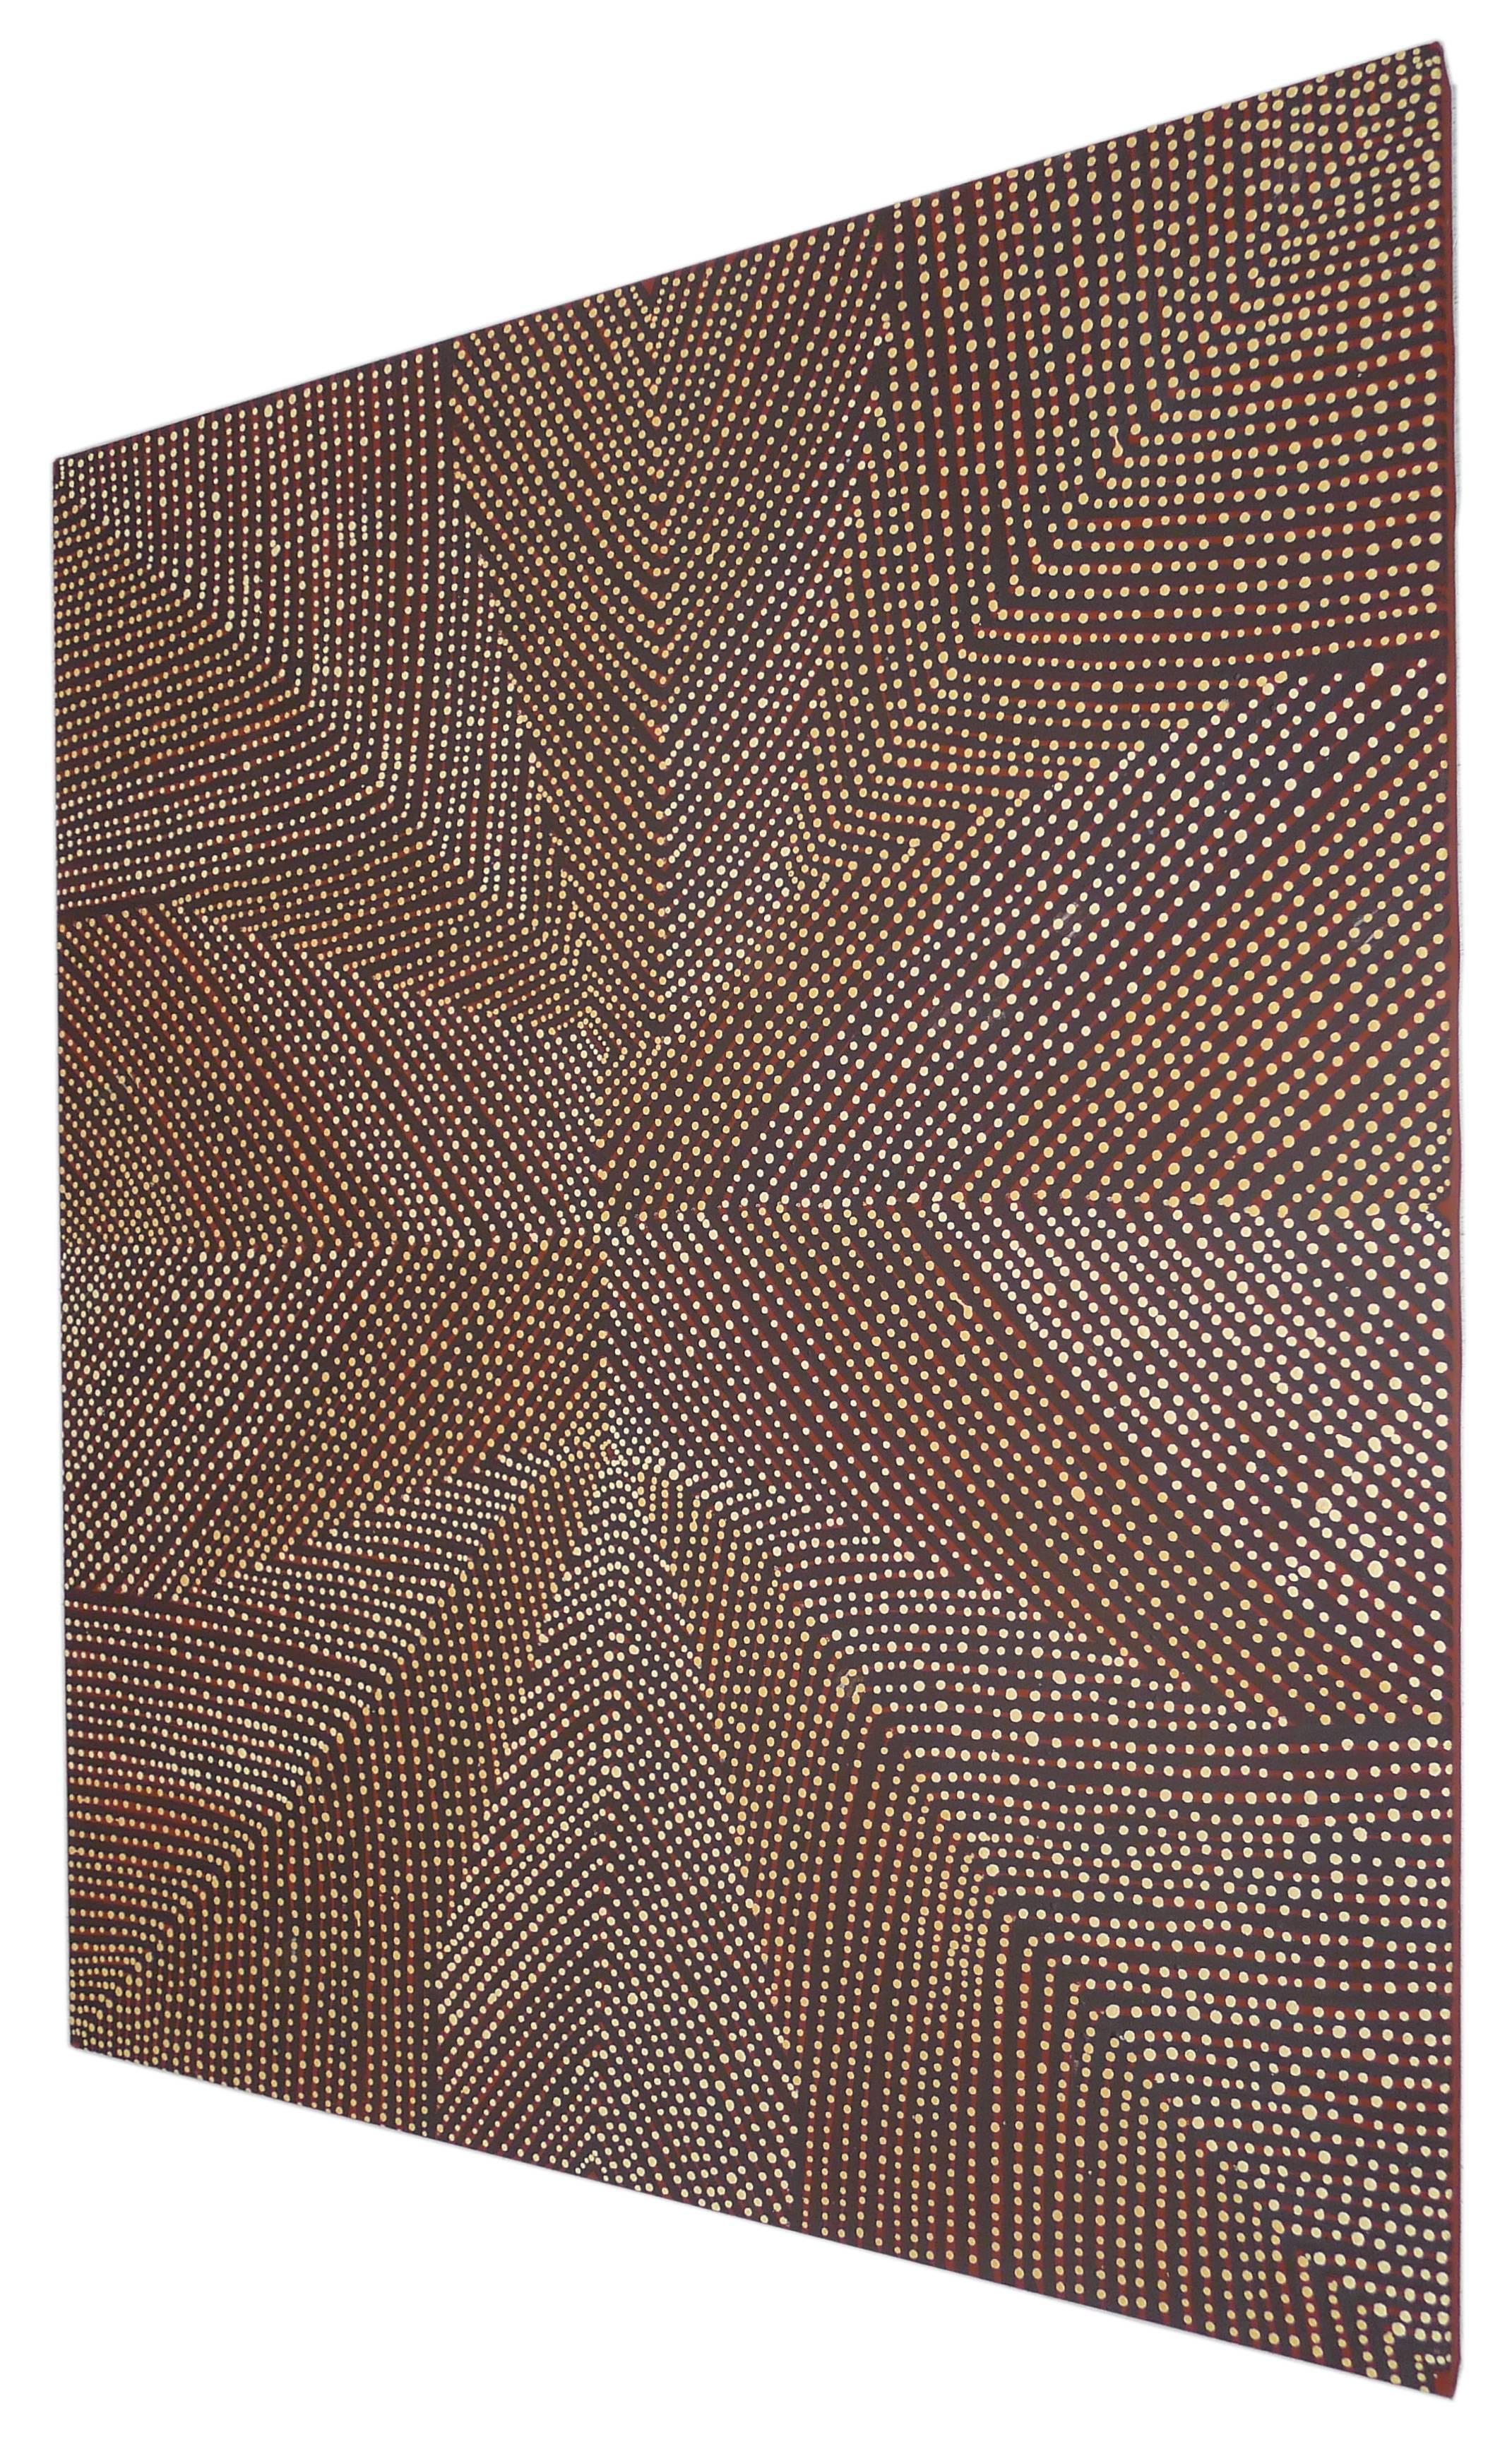 Painted Indigenous Australian Dotted Pattern Painting by Maureen Napangardi